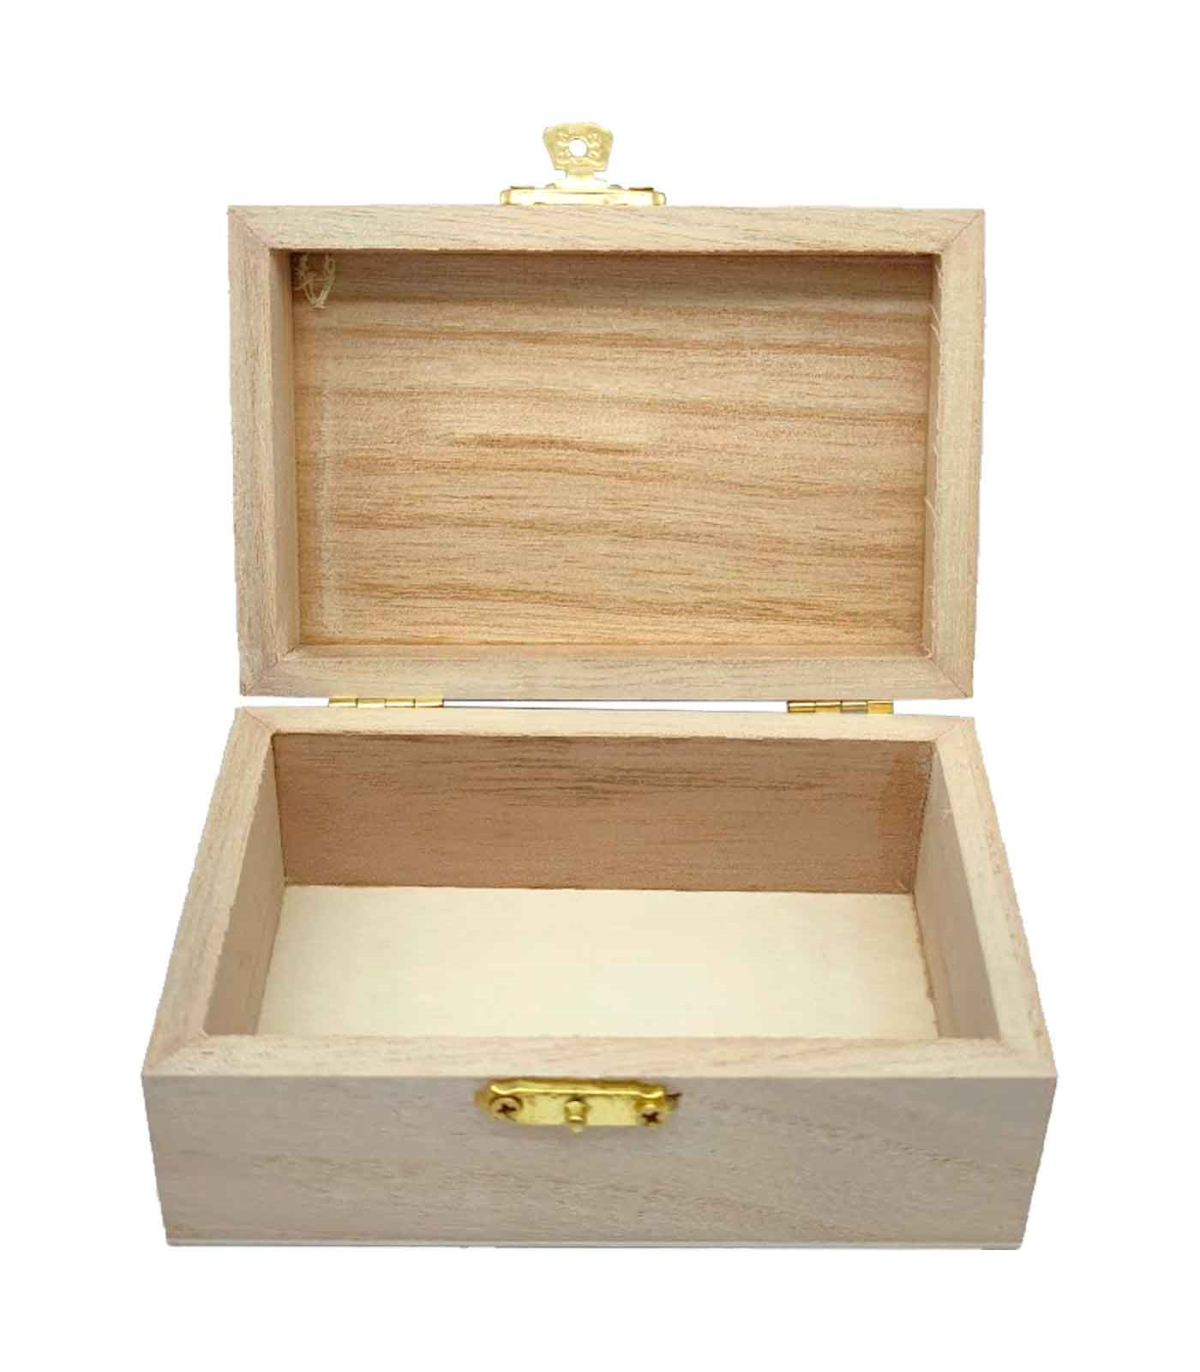 Tradineur - Caja de madera Infusiones con tapa de cristal, caja